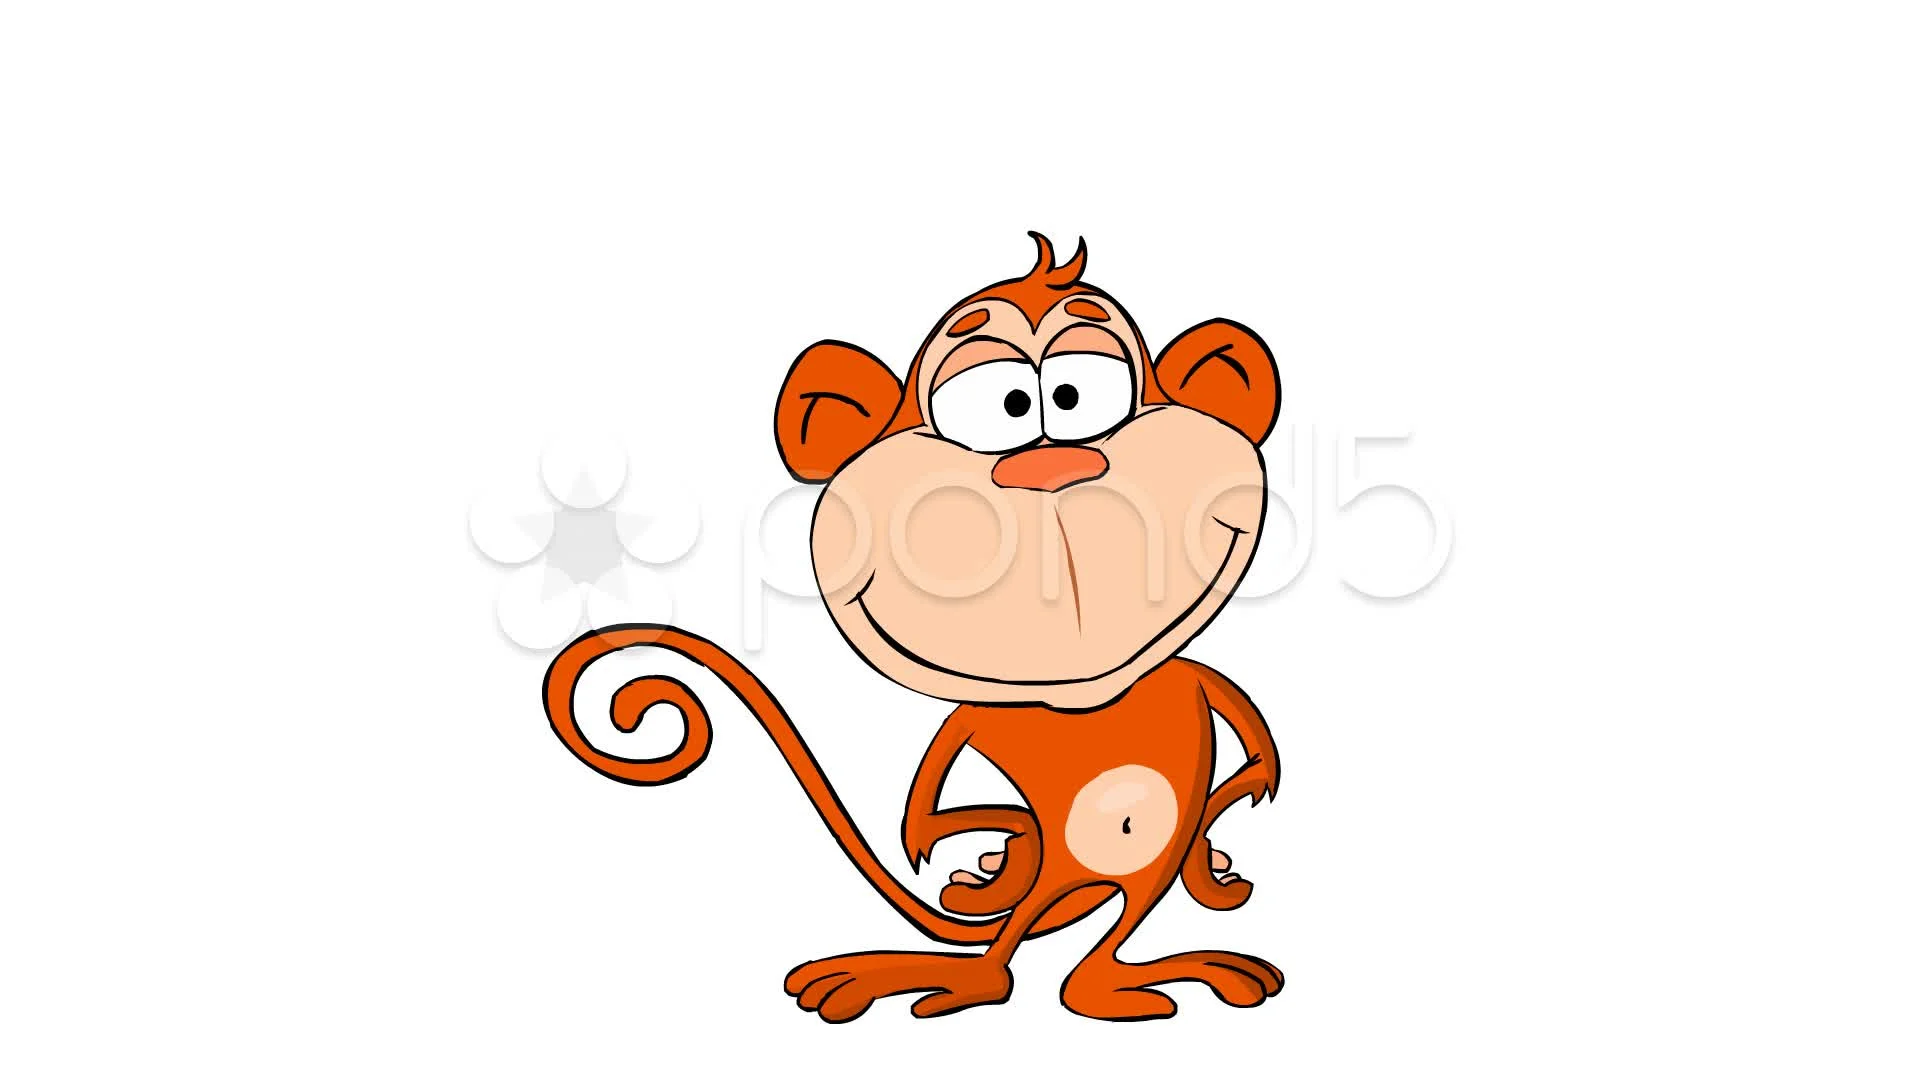 animated crazy looking monkey